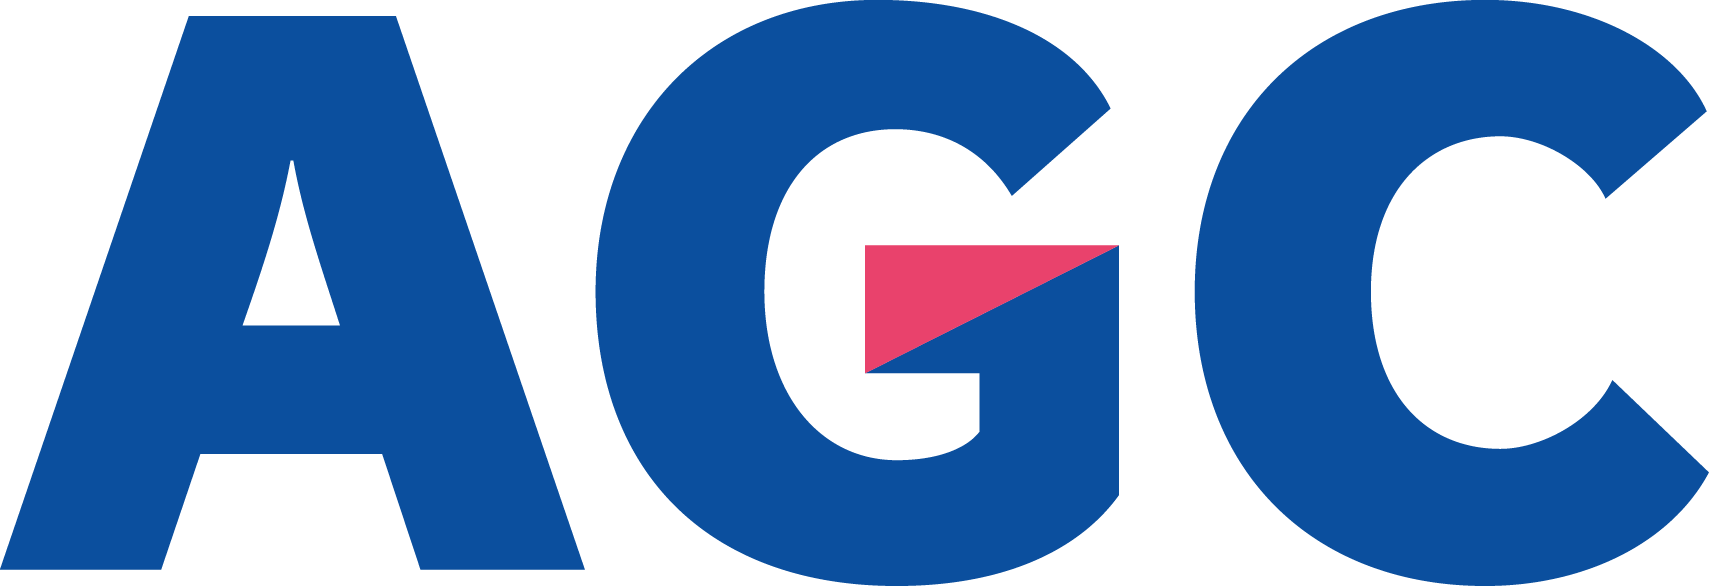 AGC Glass Europe, Zeebrugge plant